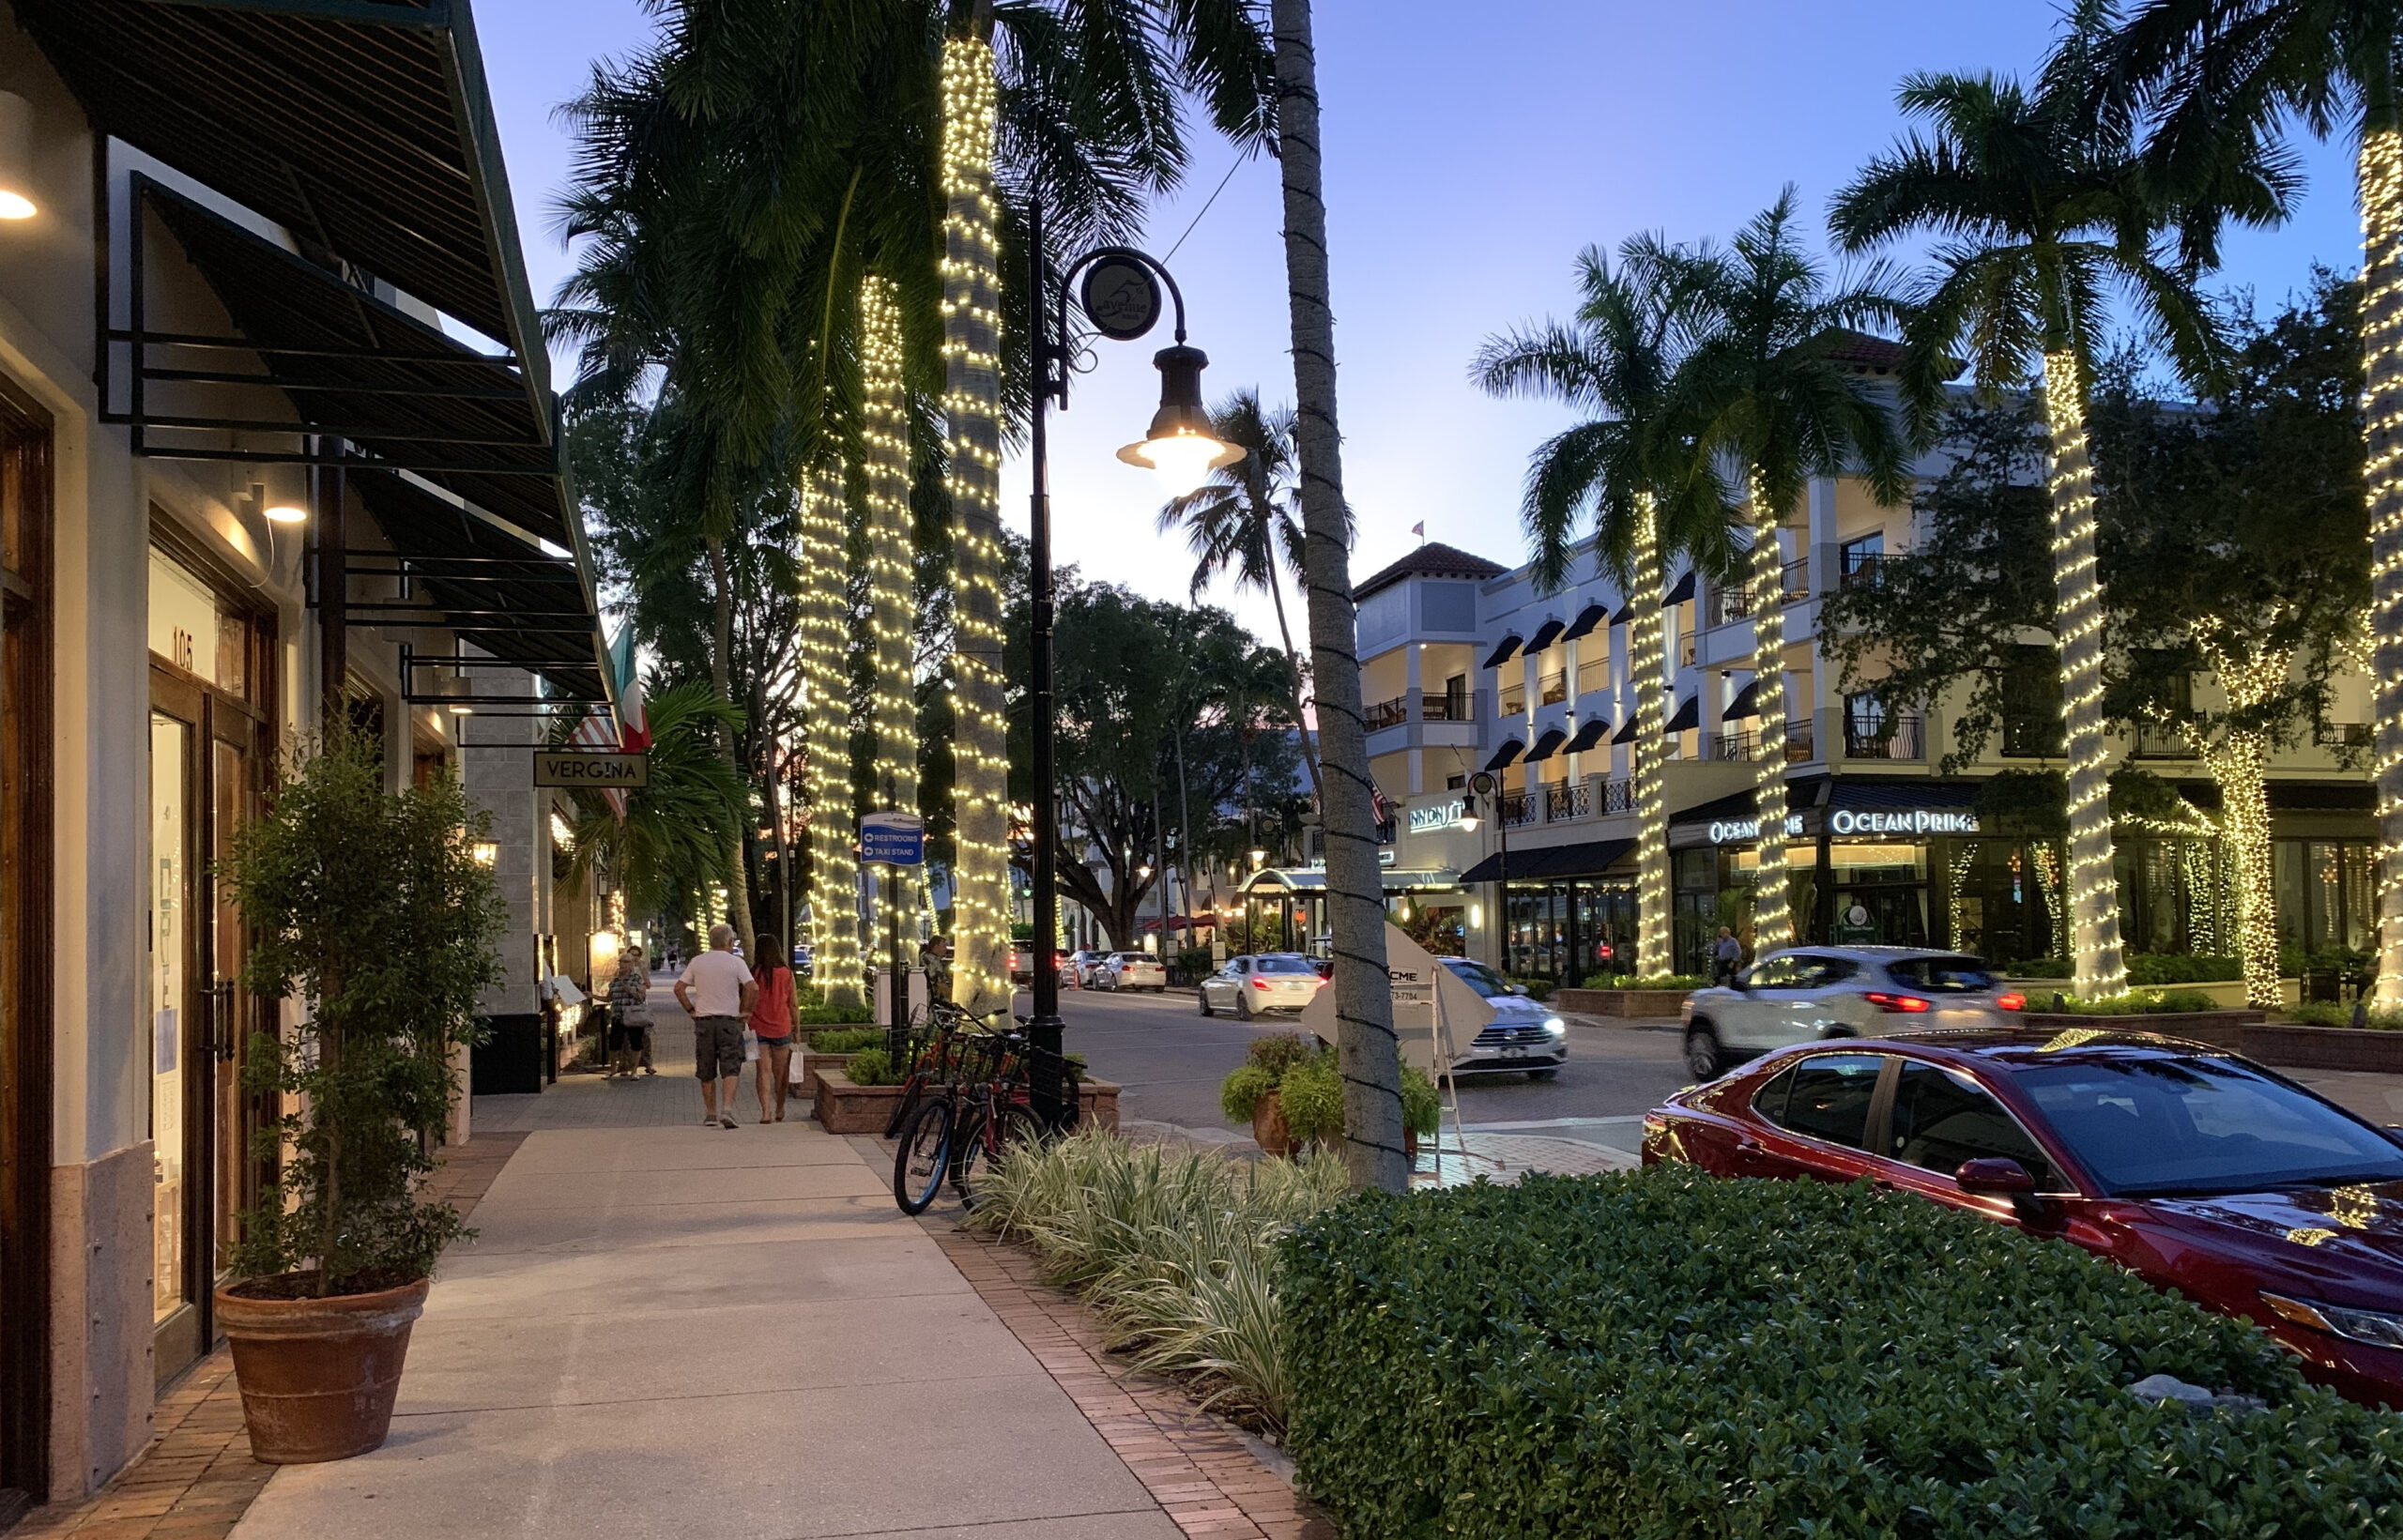 Fifth Avenue Shopping Downtown Naples, Florida